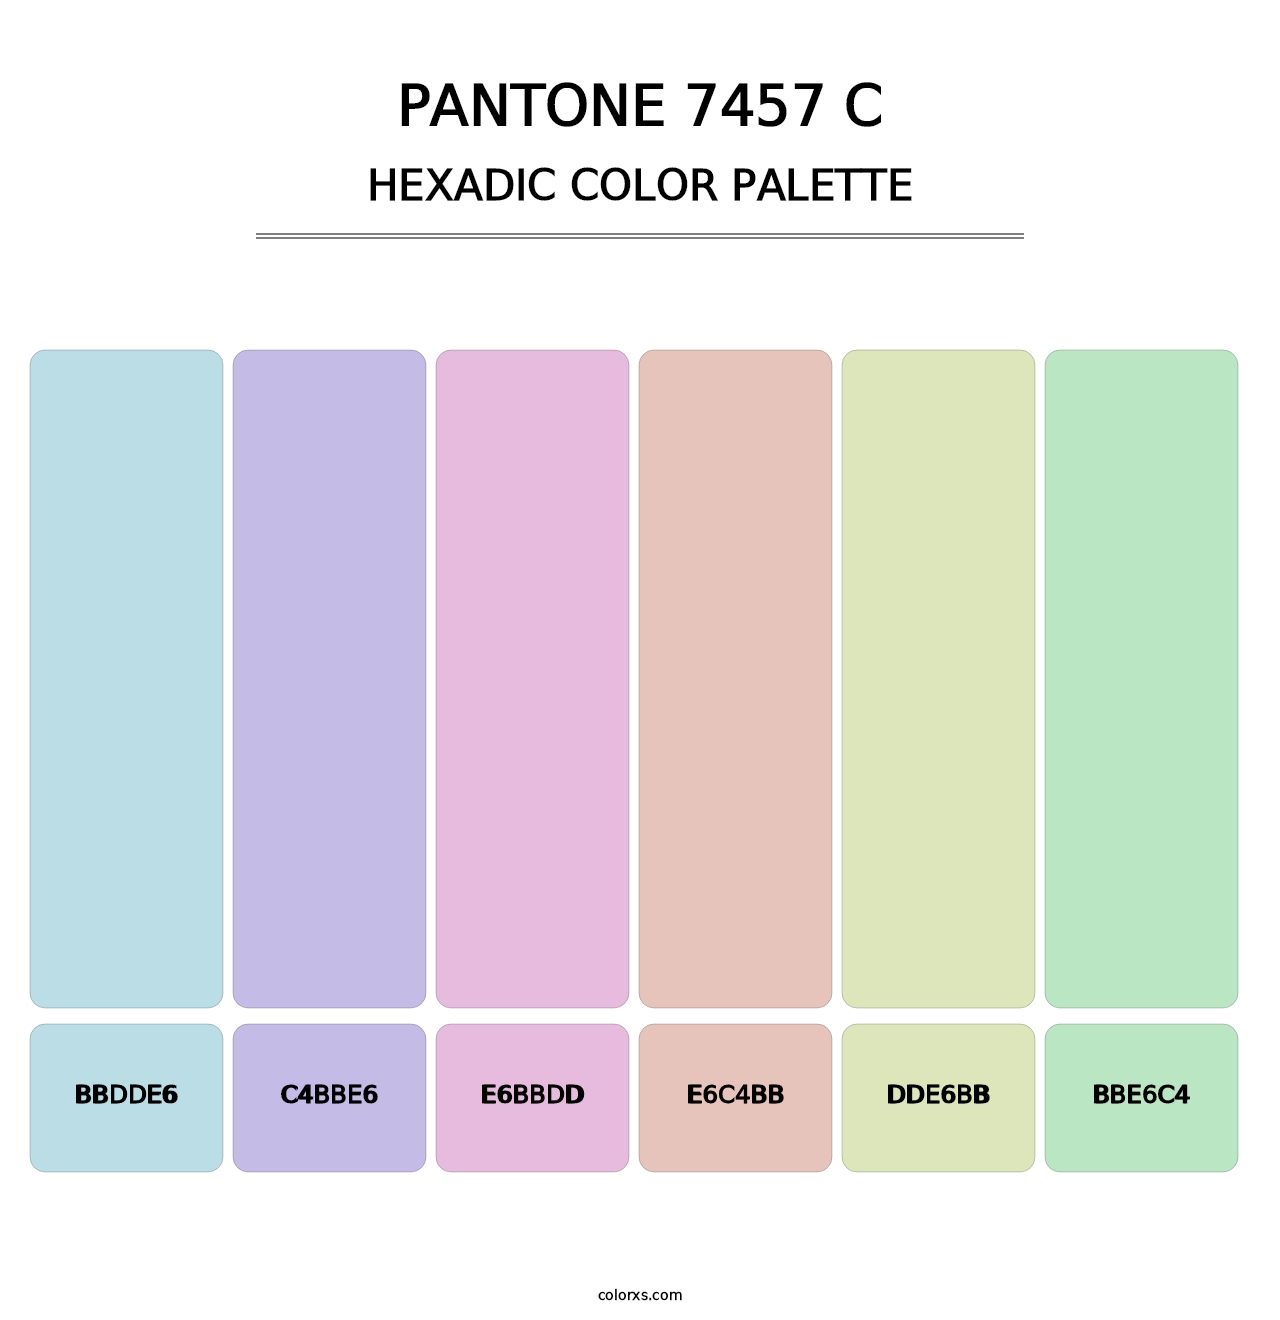 PANTONE 7457 C - Hexadic Color Palette